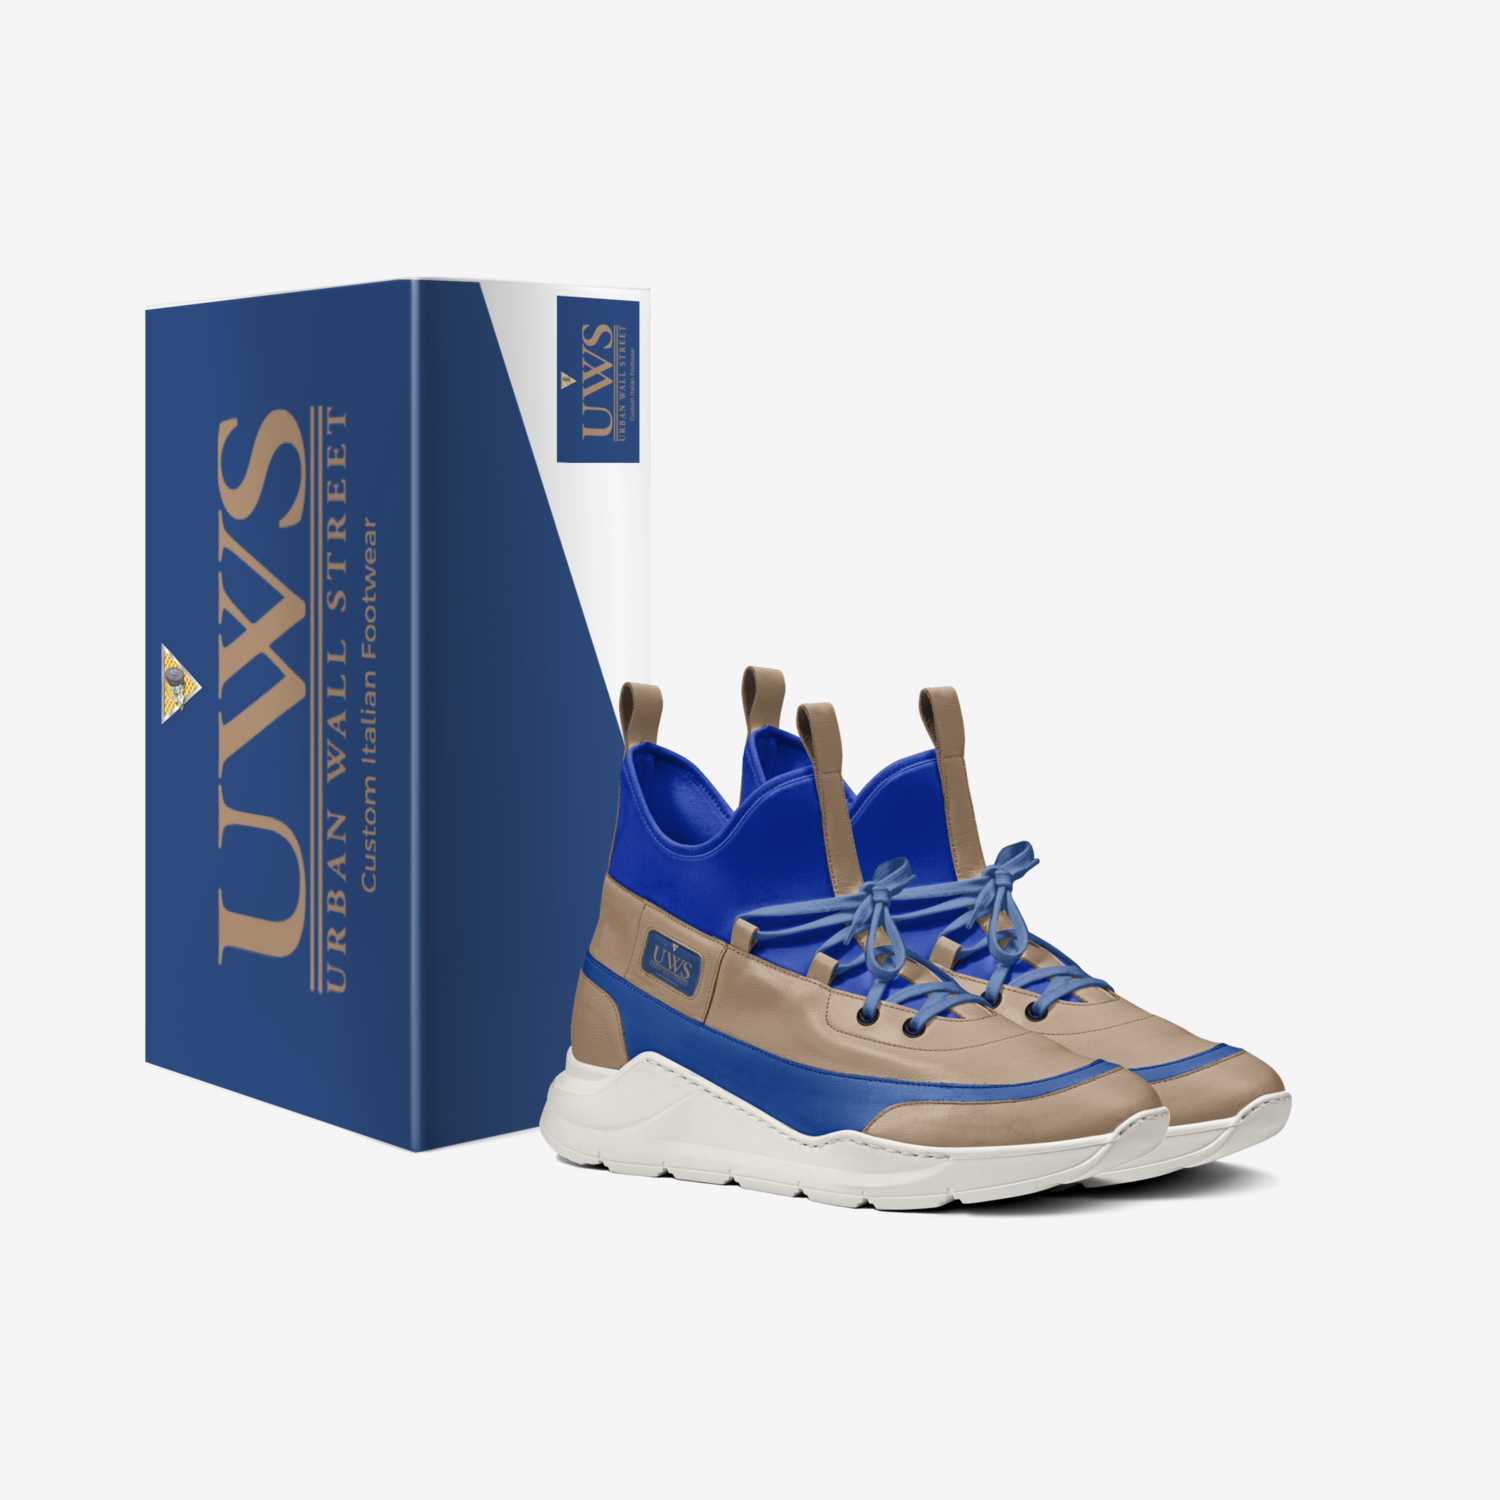 Dean Streetz custom made in Italy shoes by Urbanwallstreet Earl | Box view